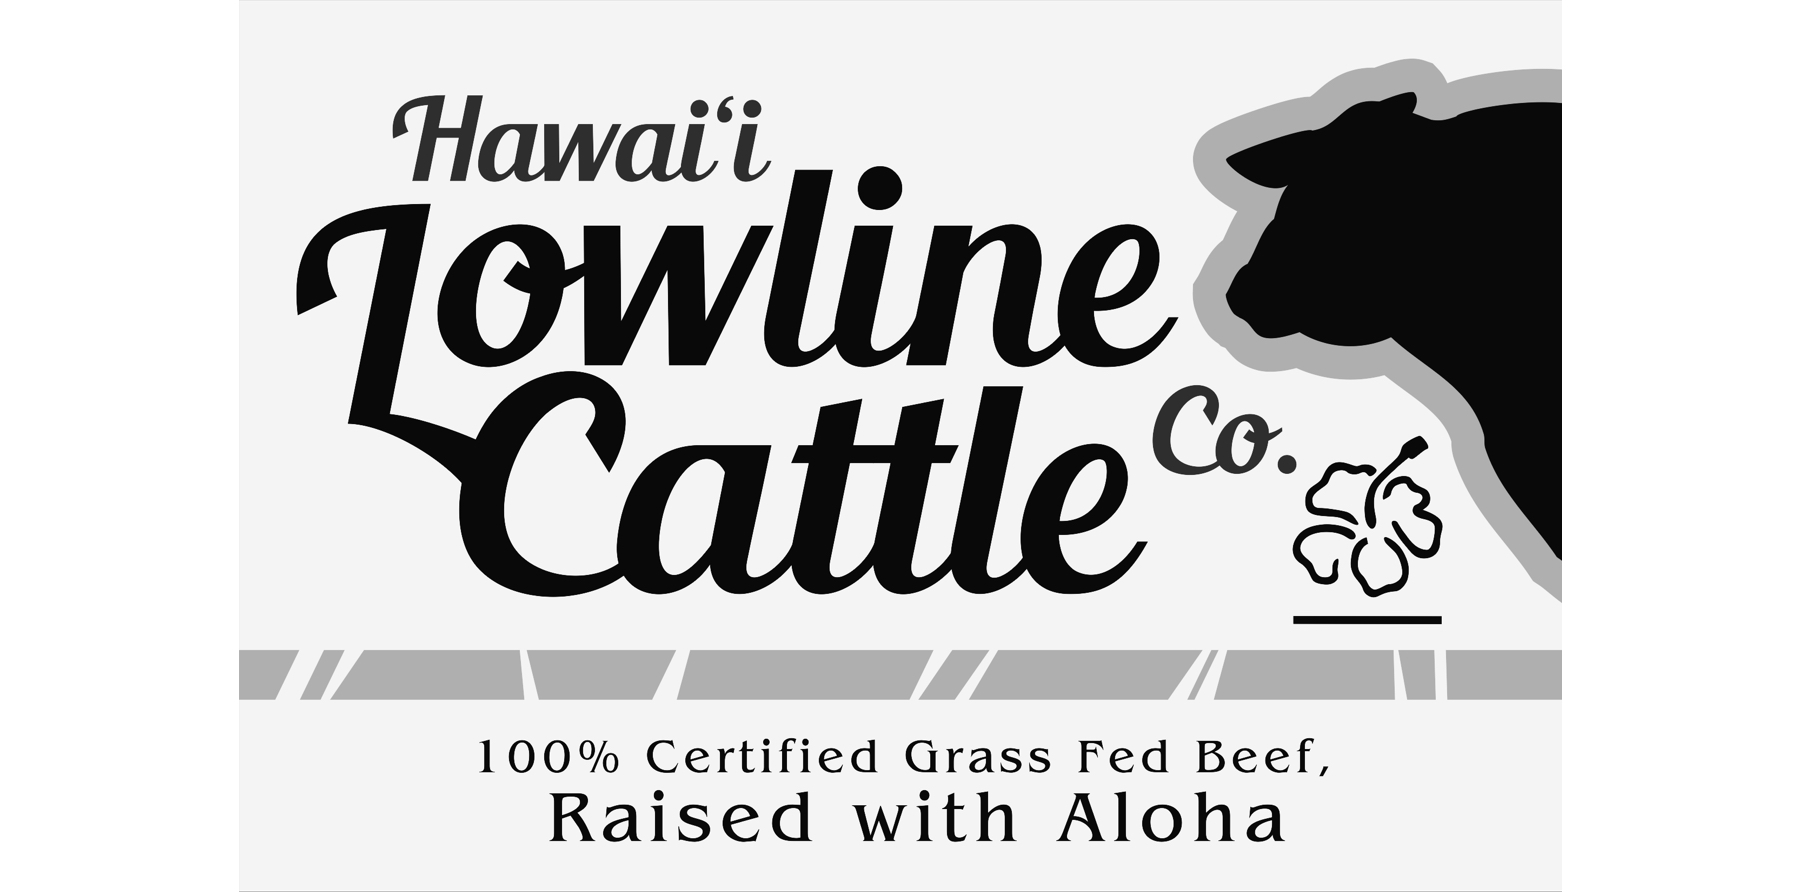 Hawaii Lowline Cattle Company